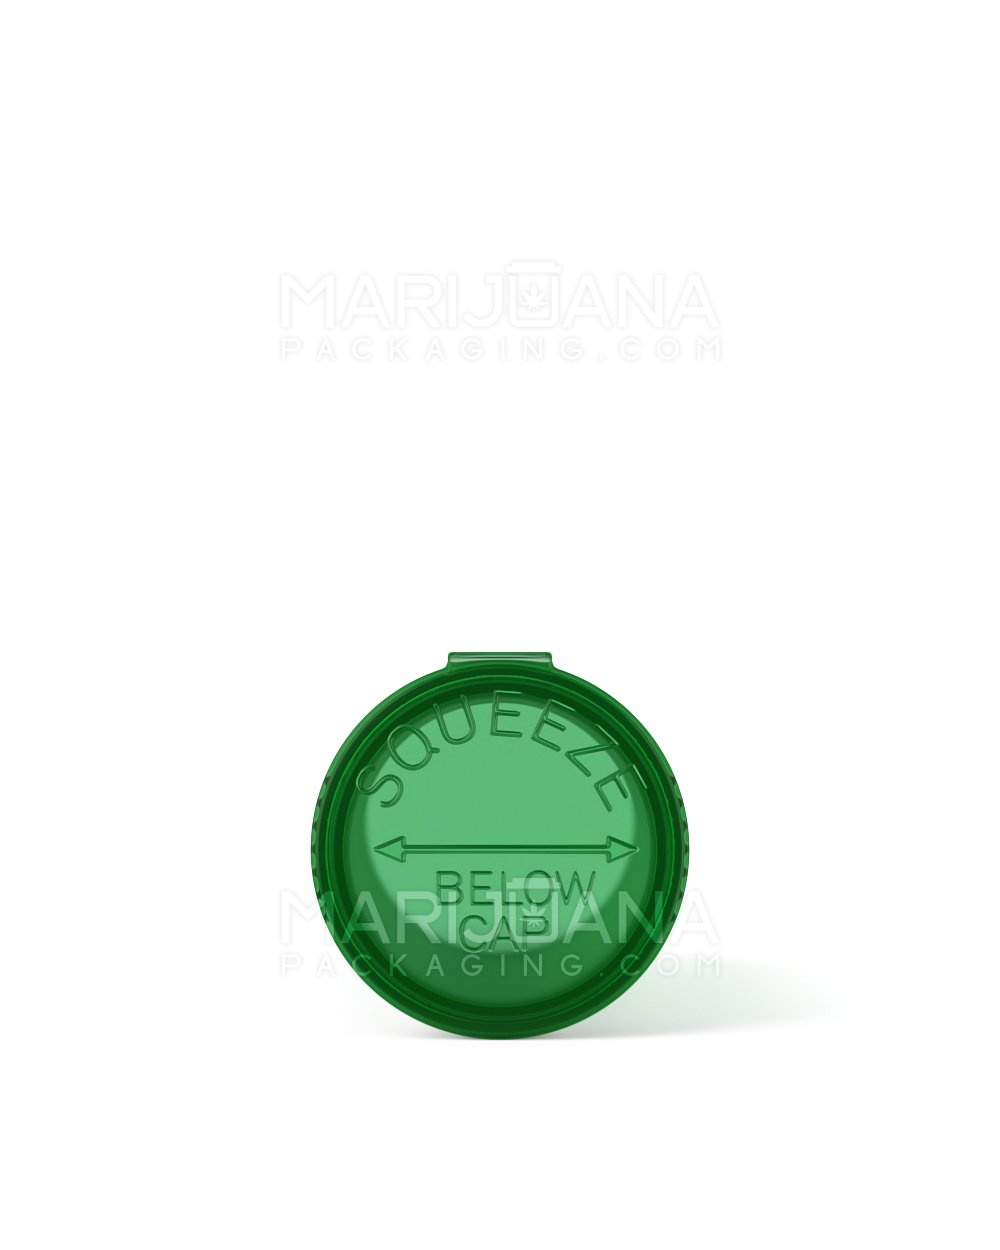 Child Resistant | Transparent Green Pop Top Bottles | 13dr - 2g - 315 Count - 4